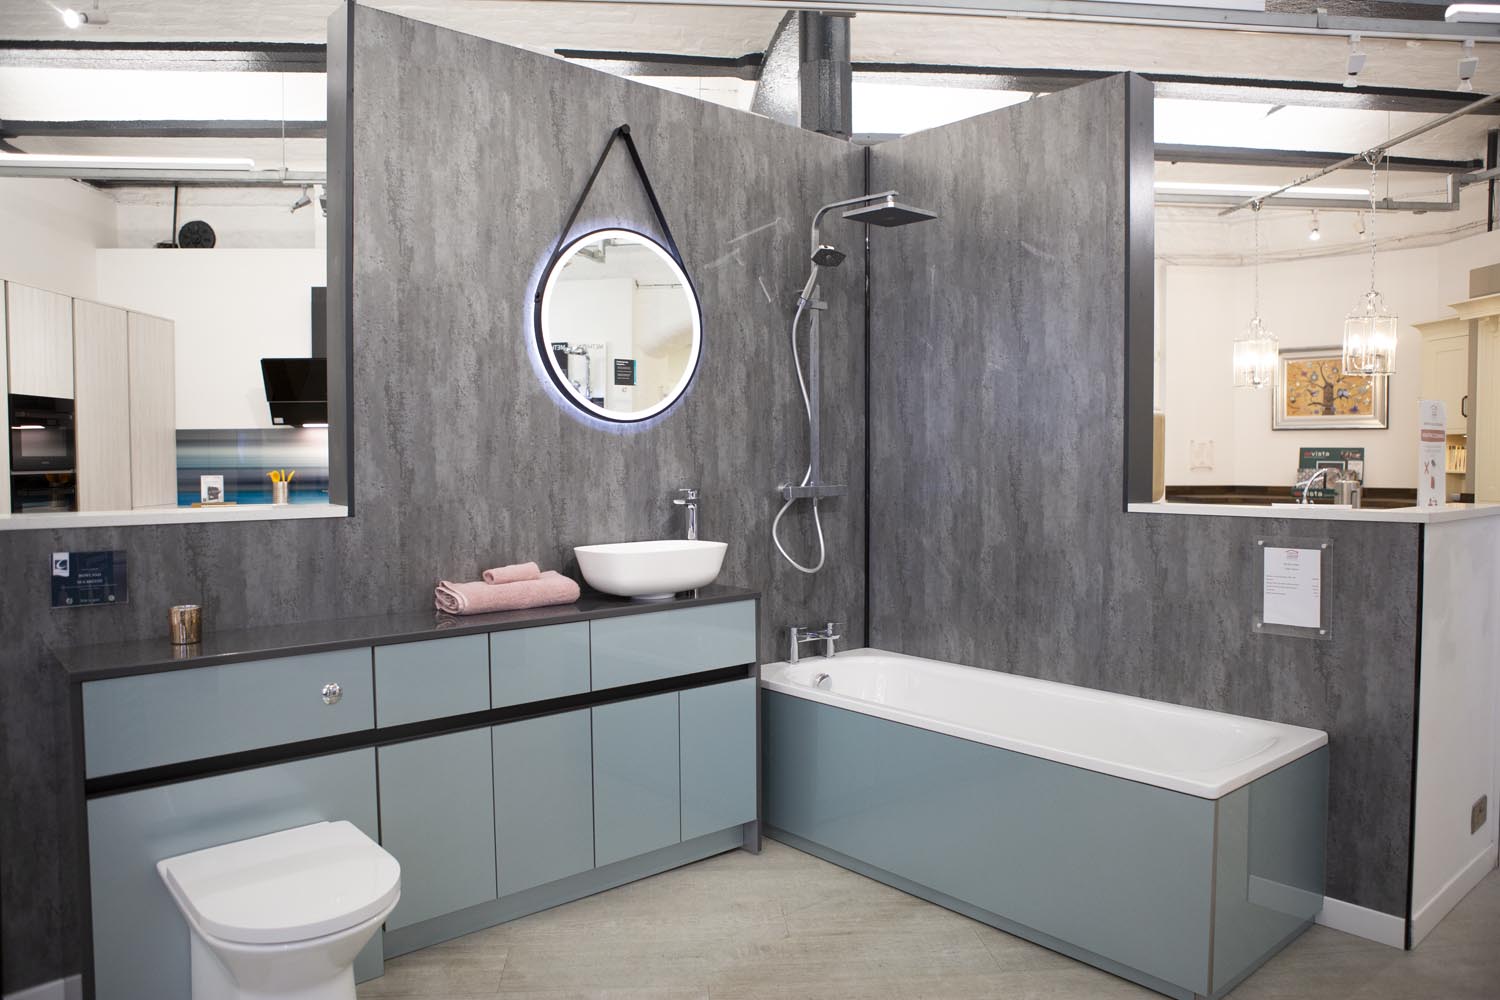 Calypso bathroom in aqua colour cabinetry against grey shower panel